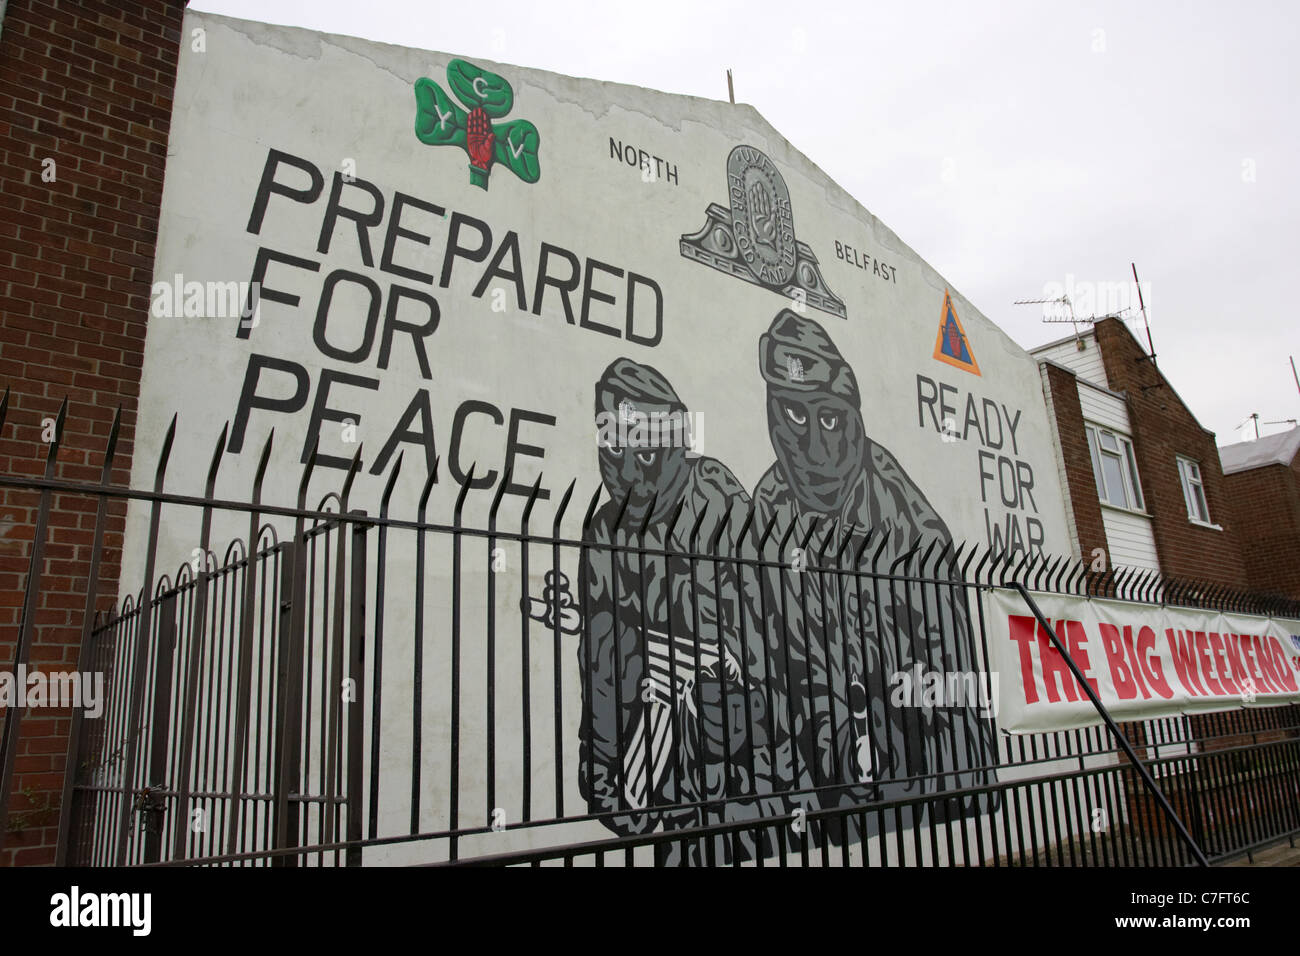 Belfast nord uvf ulster volunteer force parete lealisti pittura murale di Belfast nord Irlanda del Nord Foto Stock